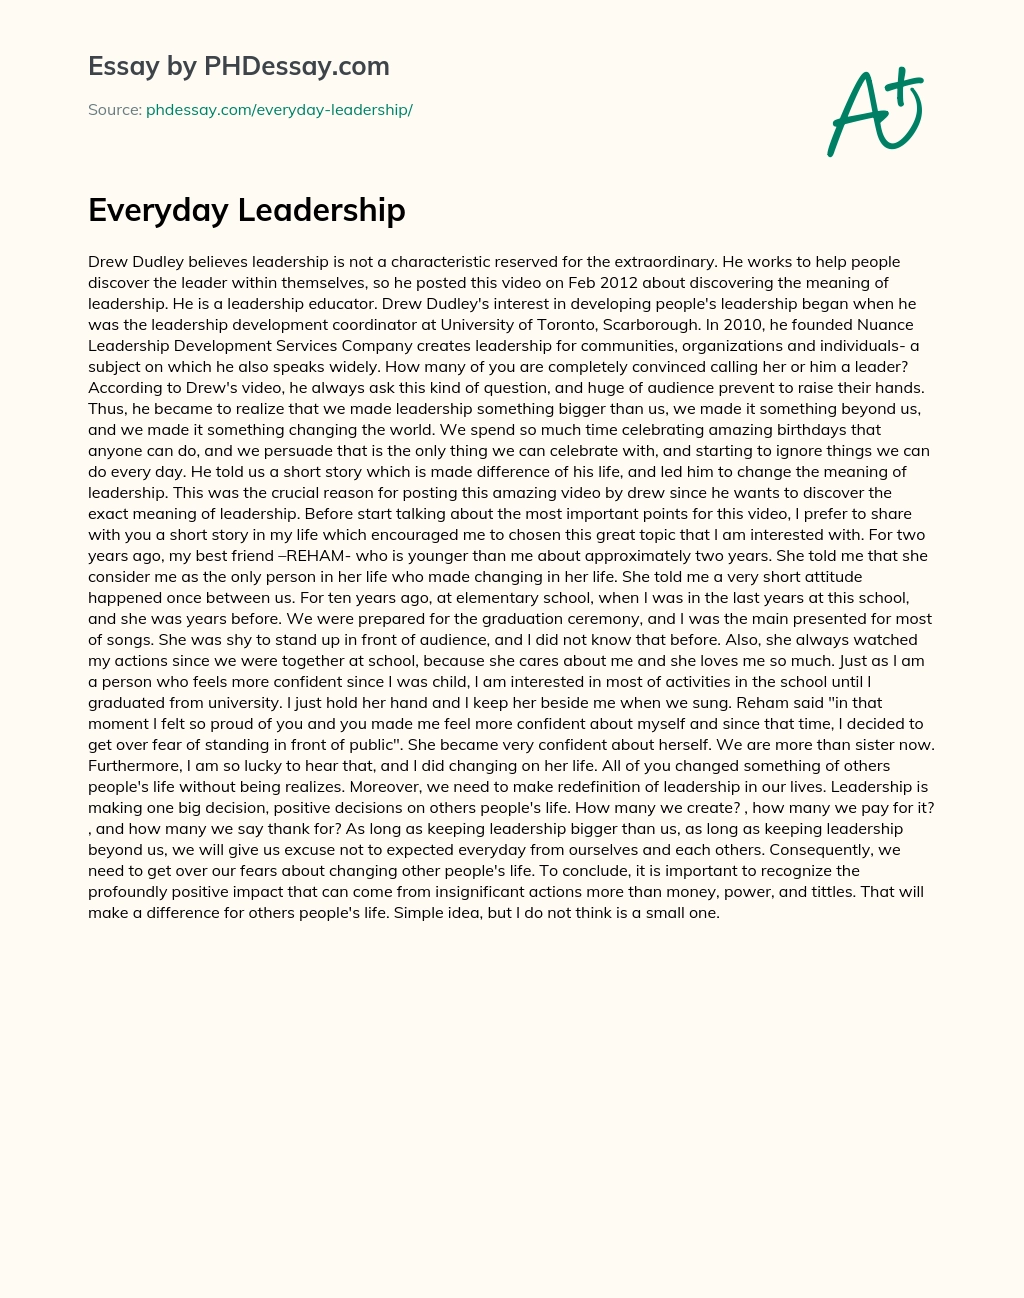 Everyday Leadership Insights essay